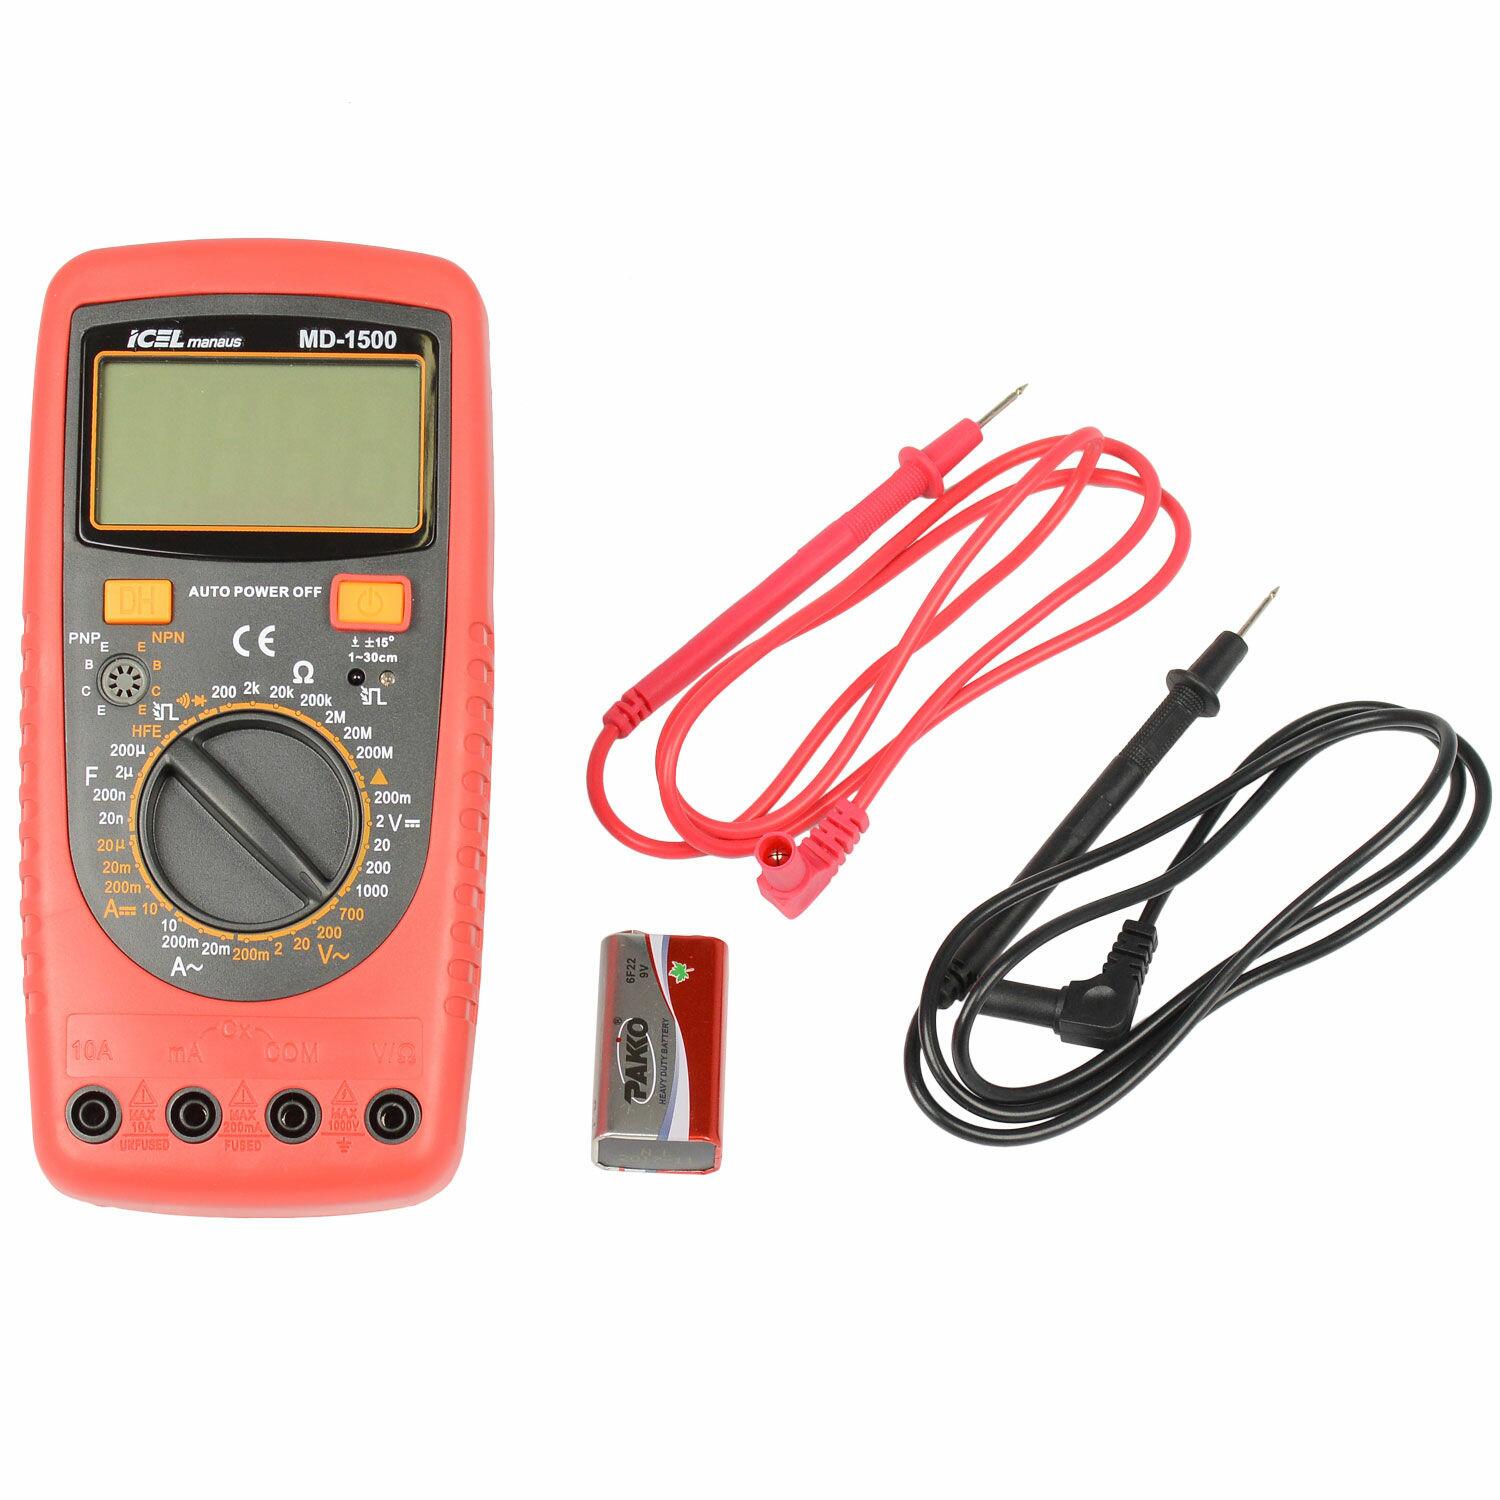 Multimetro Digital Ac/dc Md-1500 Icel - 10 Amperes